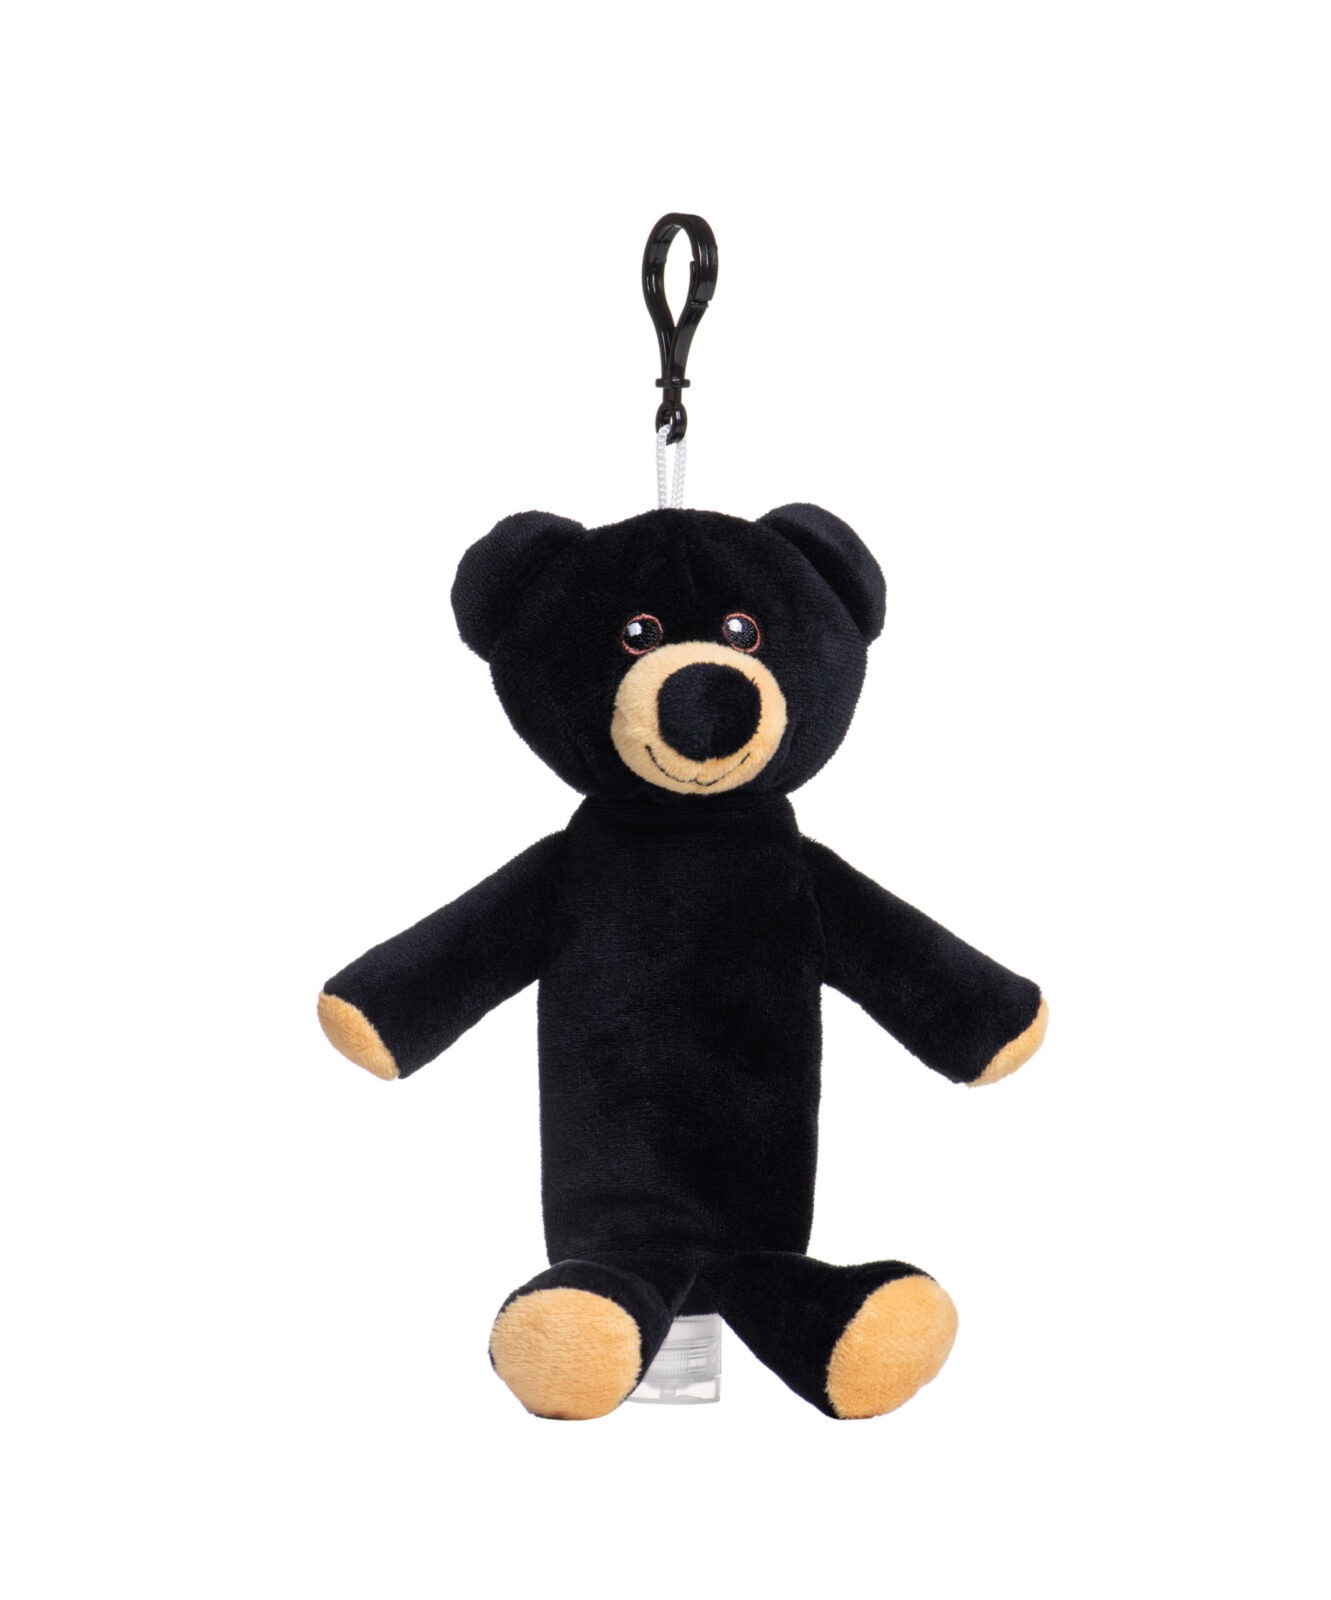 Fuzzy bear keychain/ bag clip